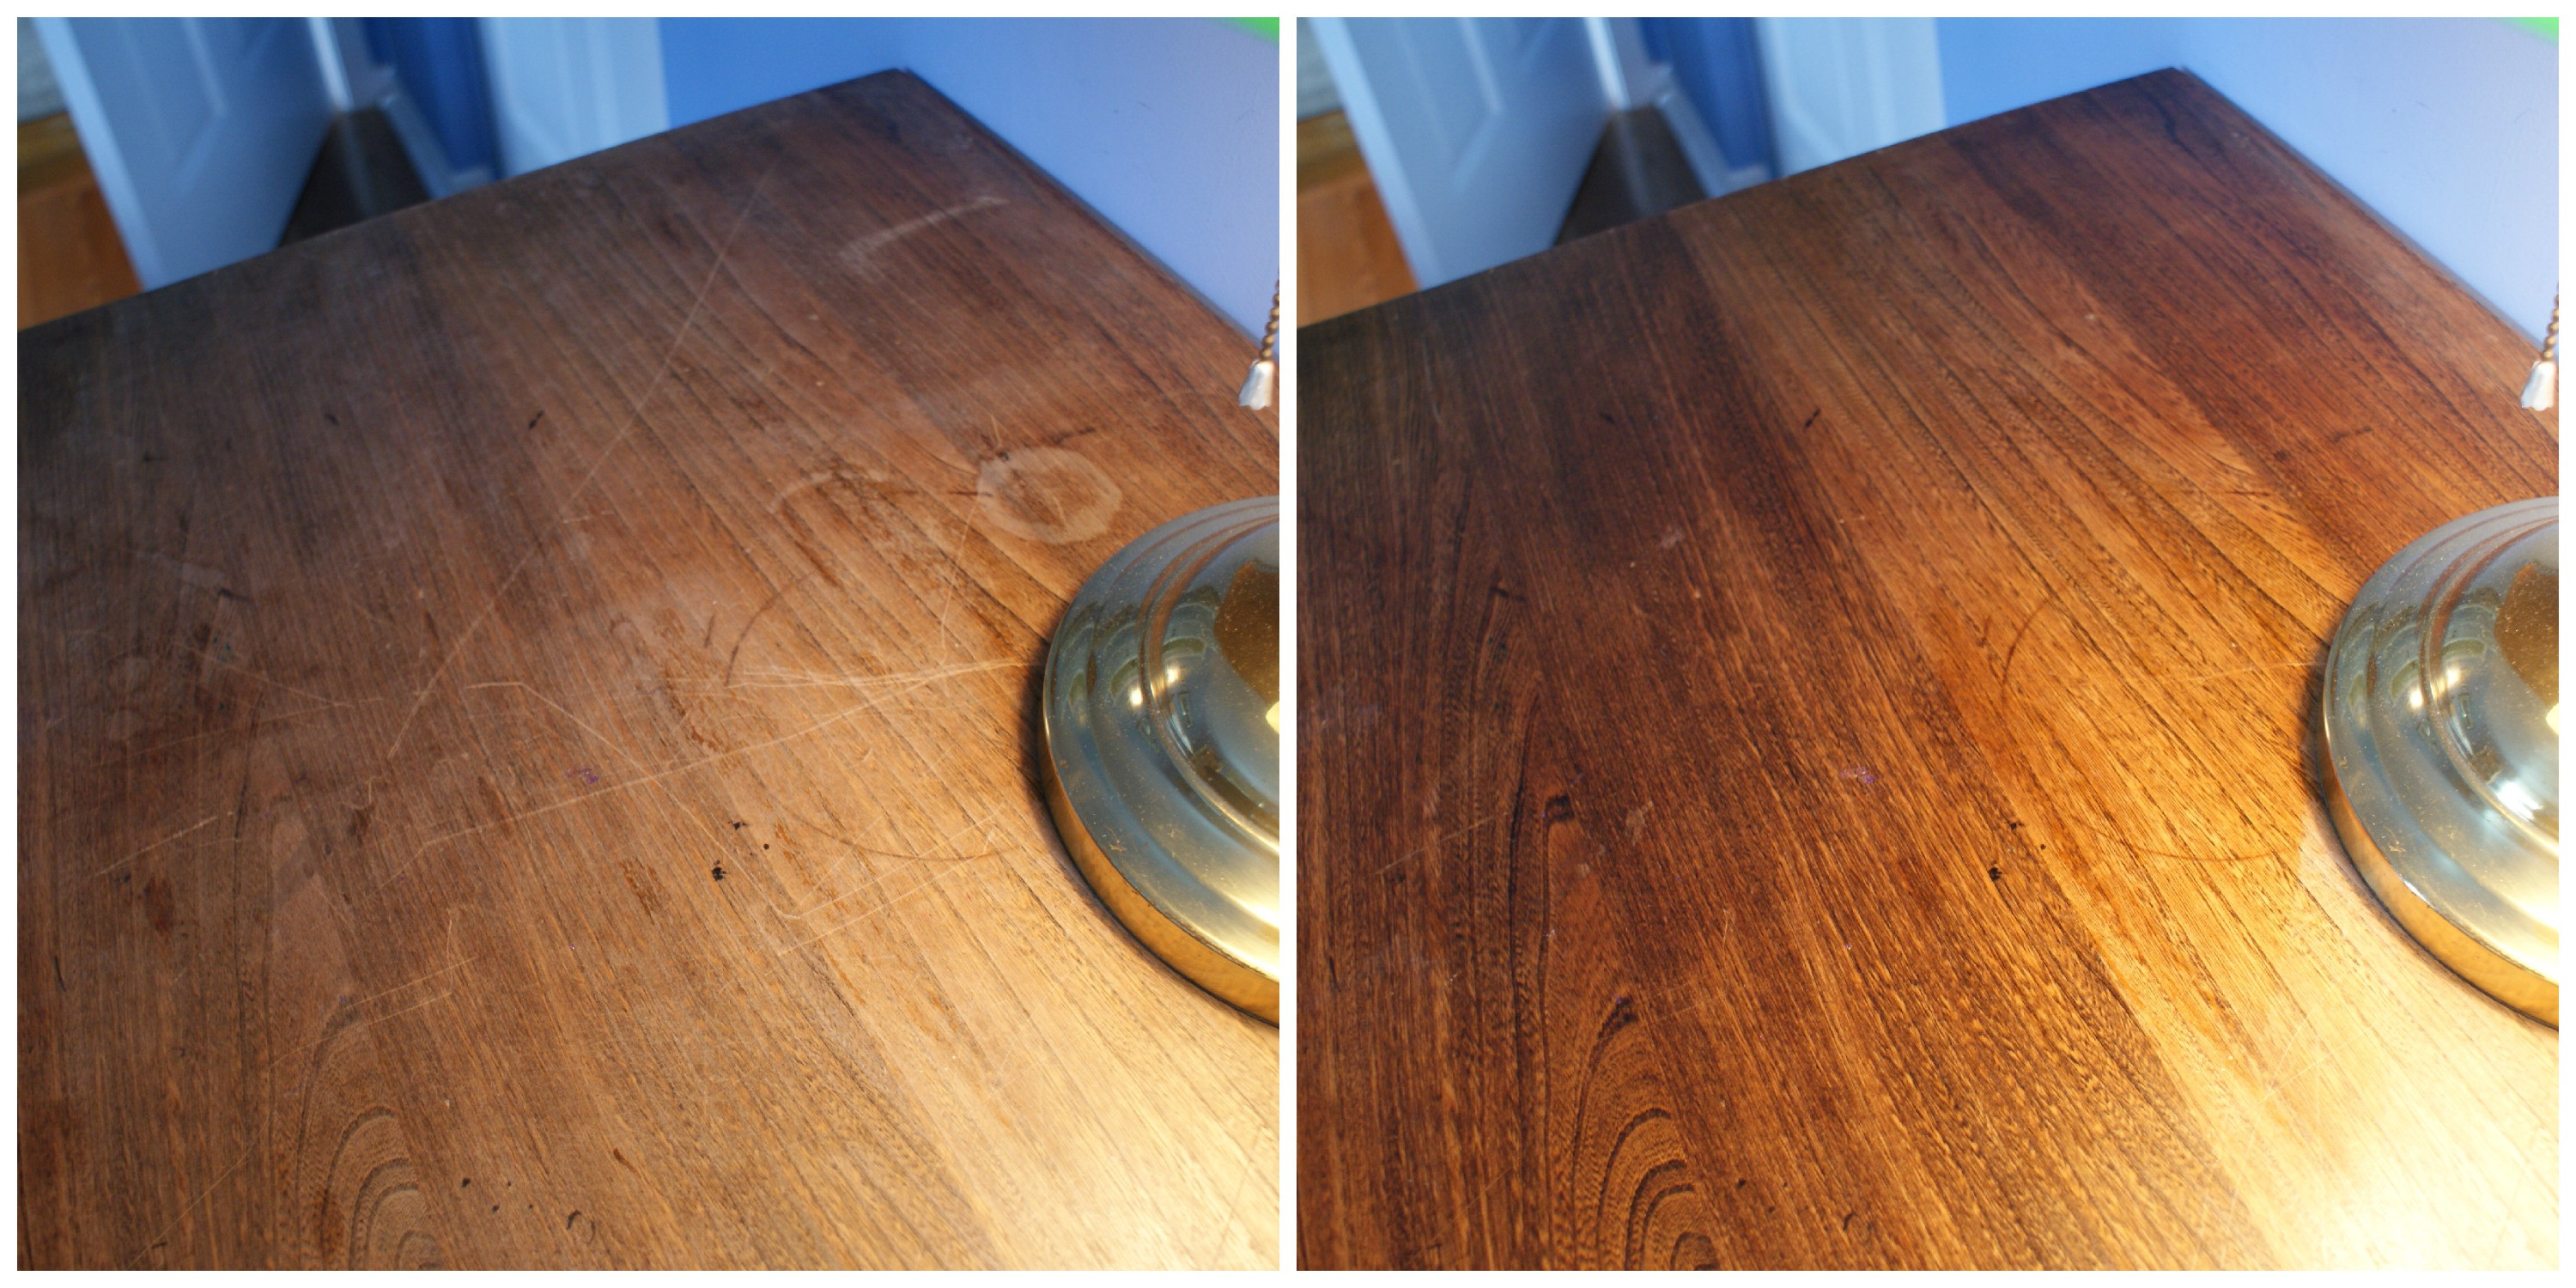 Hardwood Floor Finish Restorer Of An Oil and Vinegar Wood Furniture Polish Cleaner Lightlycrunchy Throughout Desk before and after